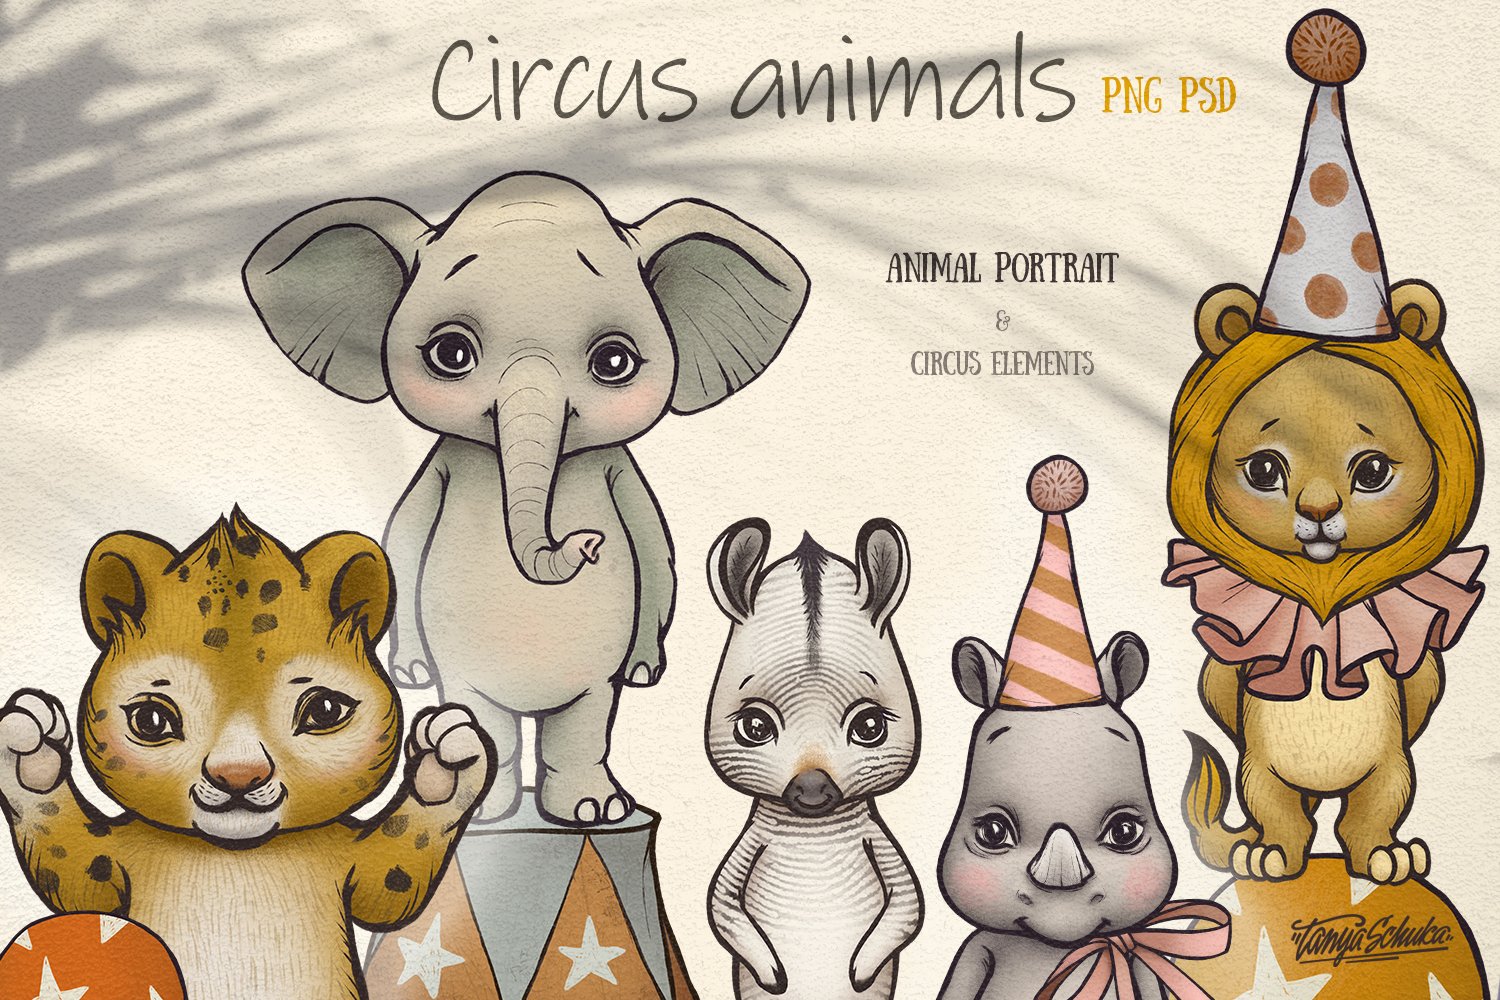 All circus animals.